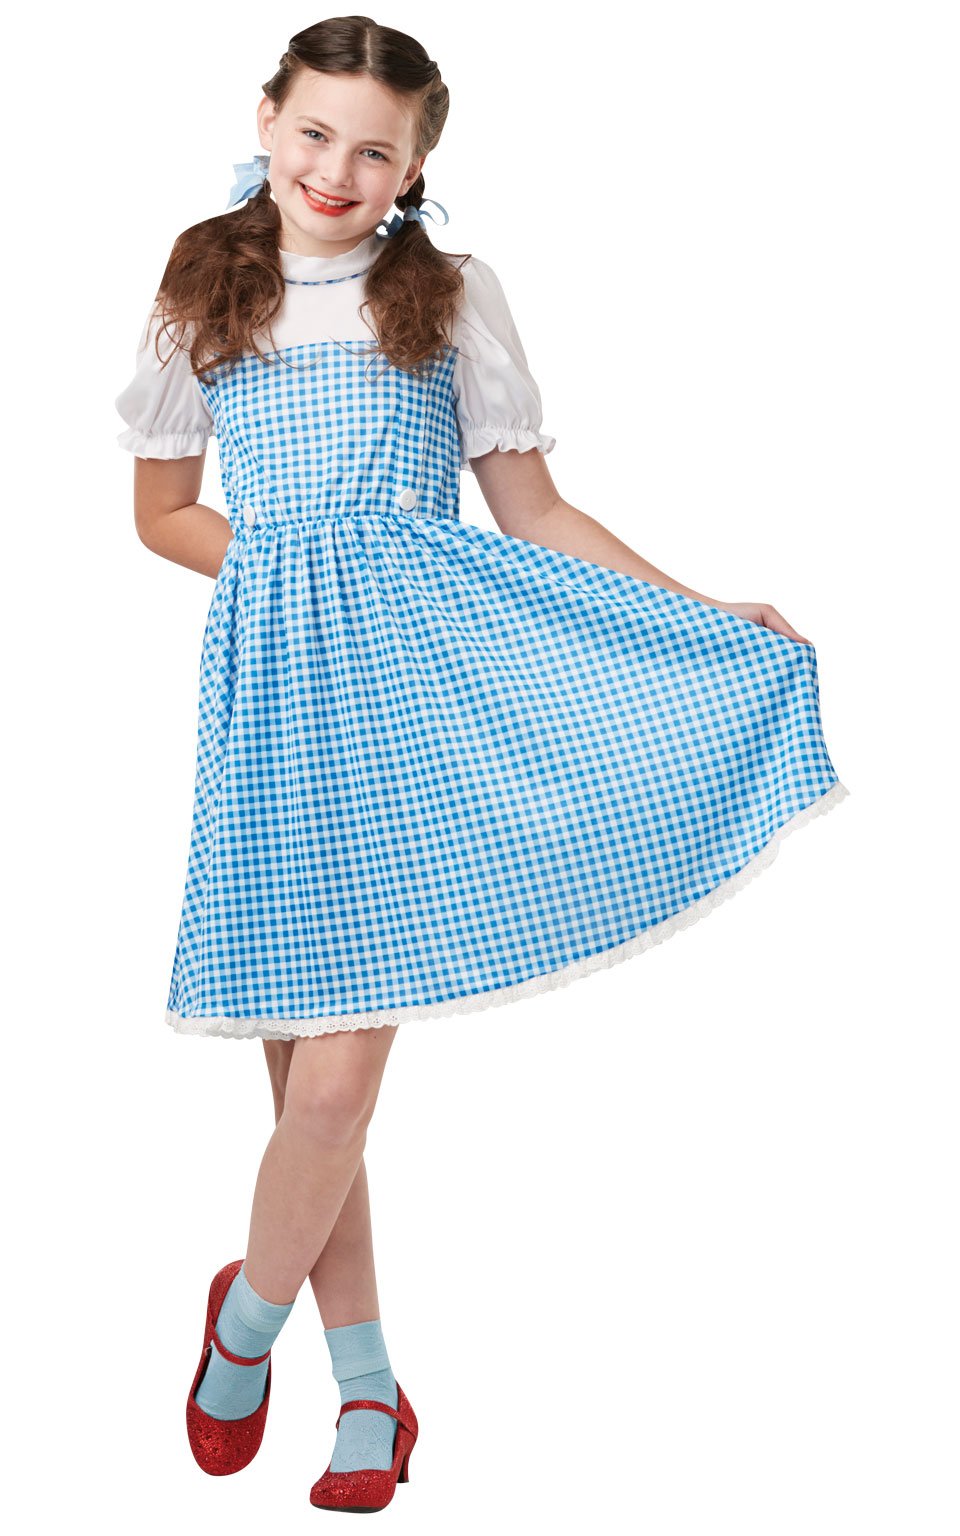 Girls Dorothy Wizard of Oz Costume